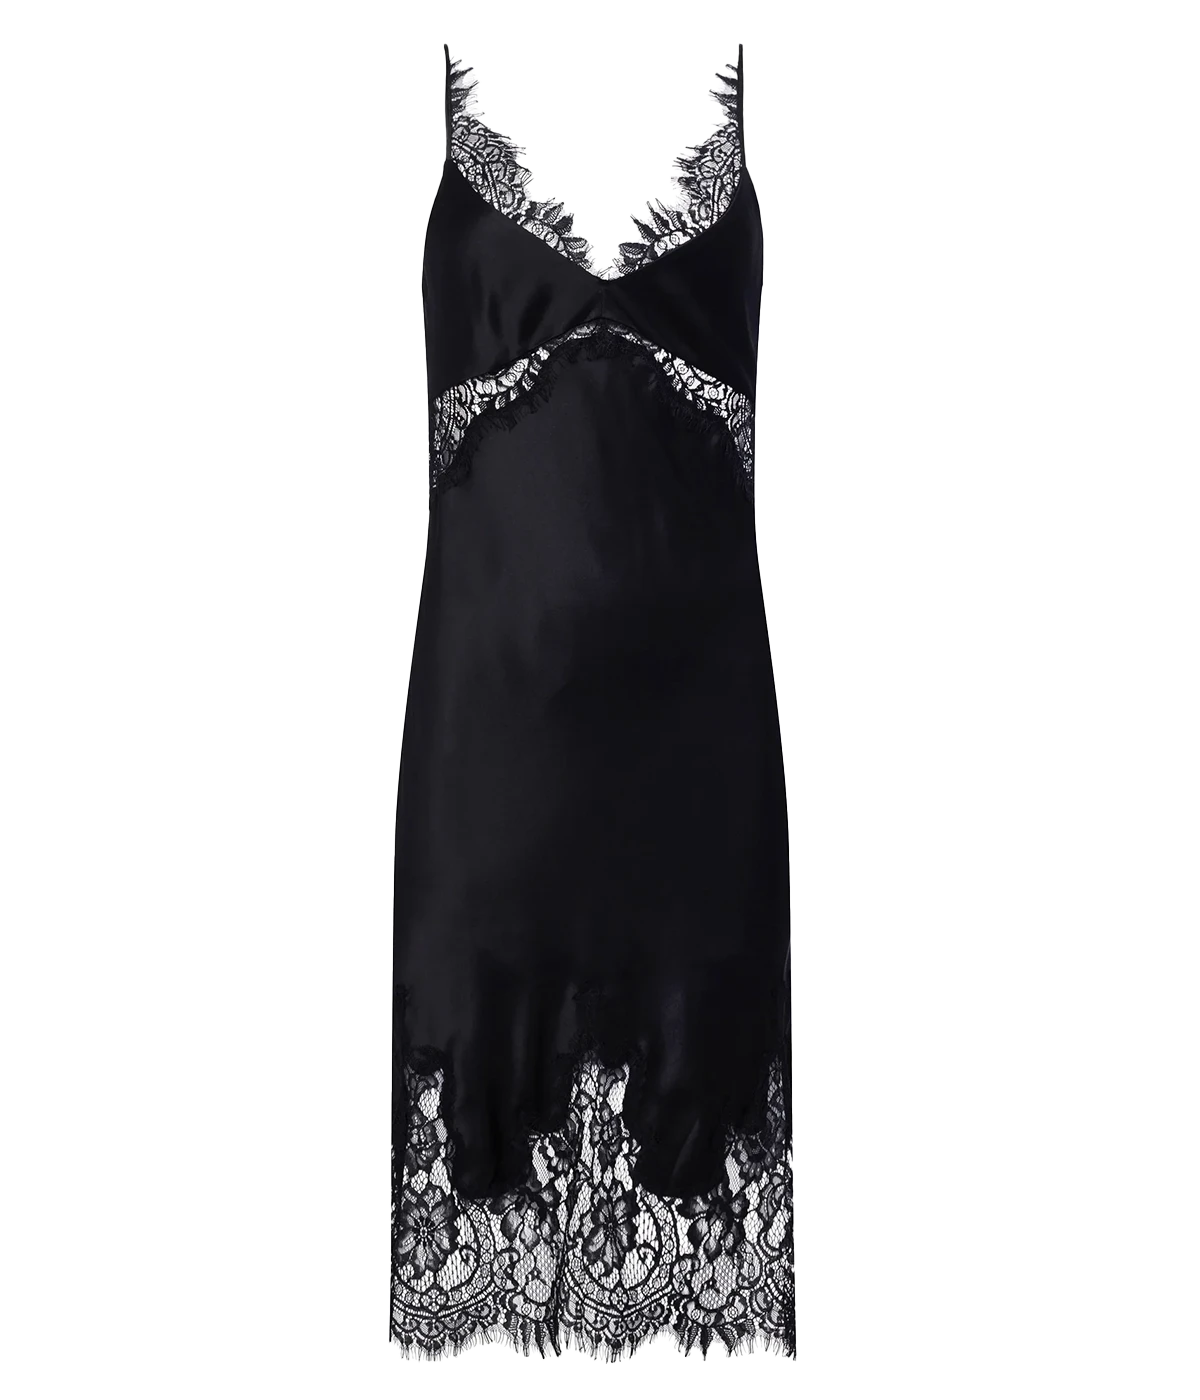 Scotlyn Lace Trim Dress in Black